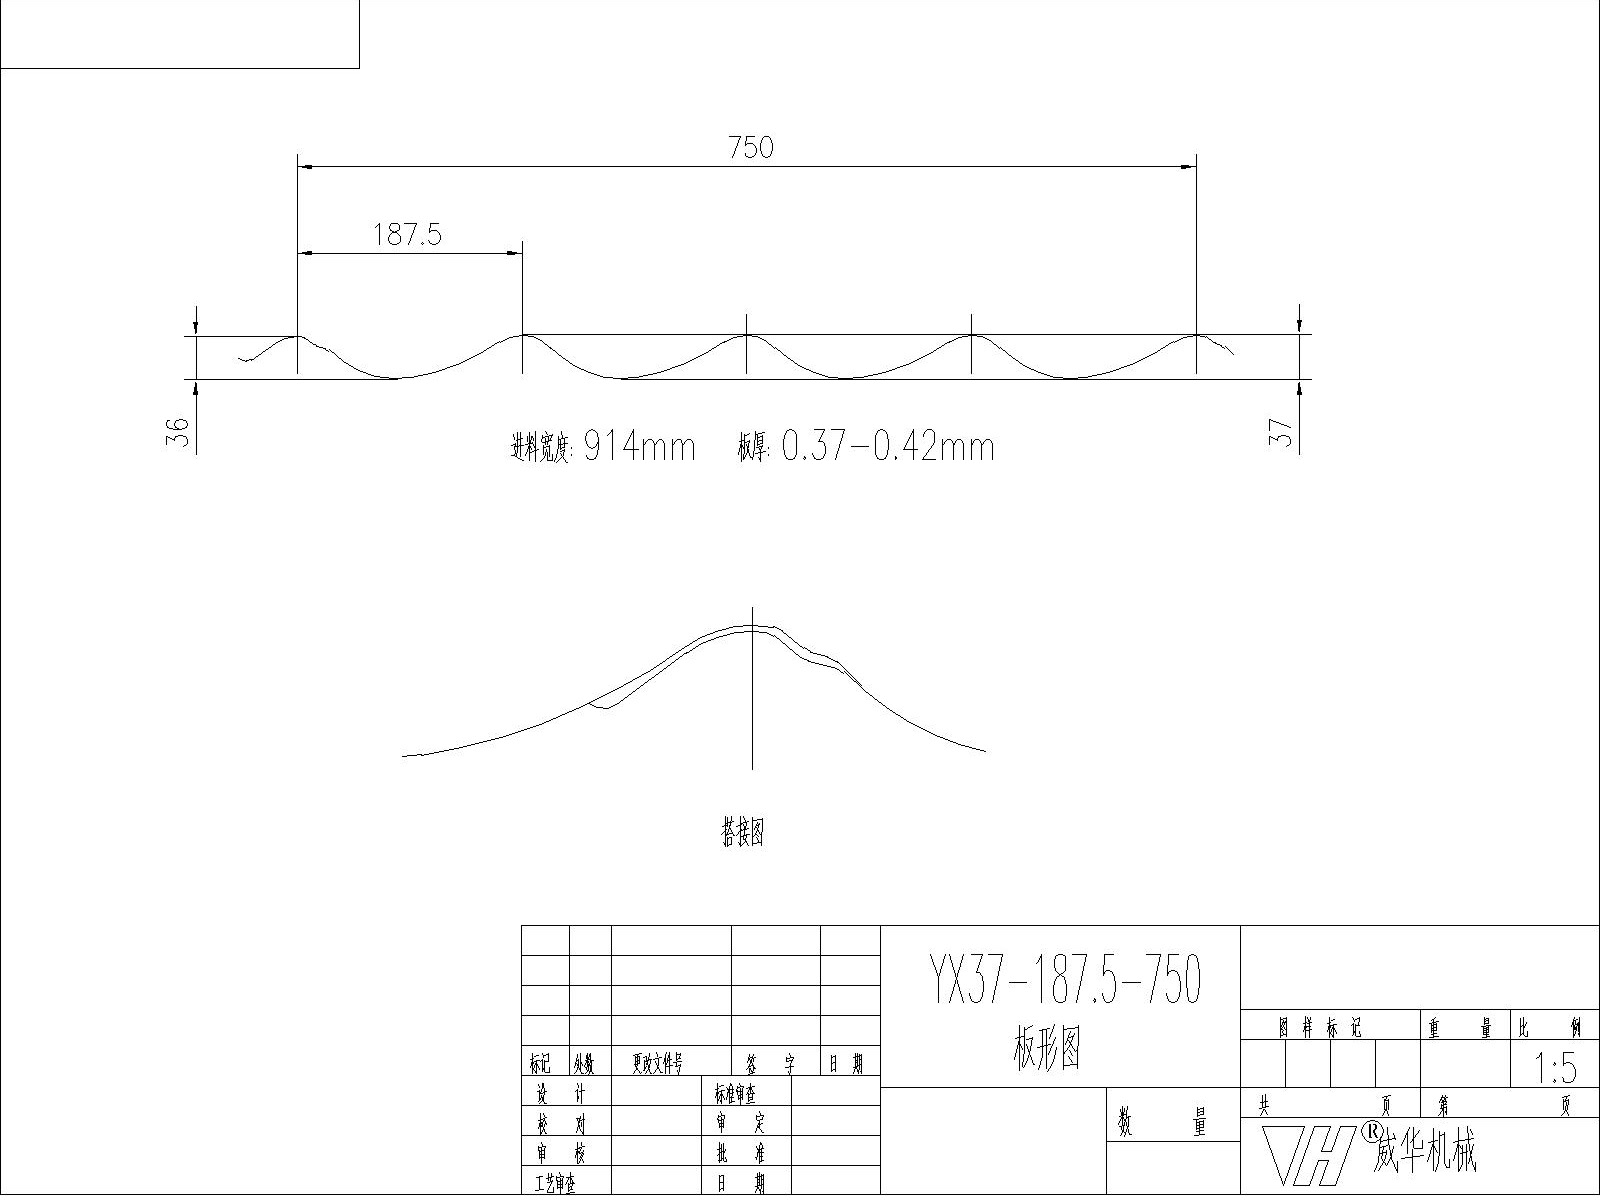 Tile Roll Forming Machine profile/design